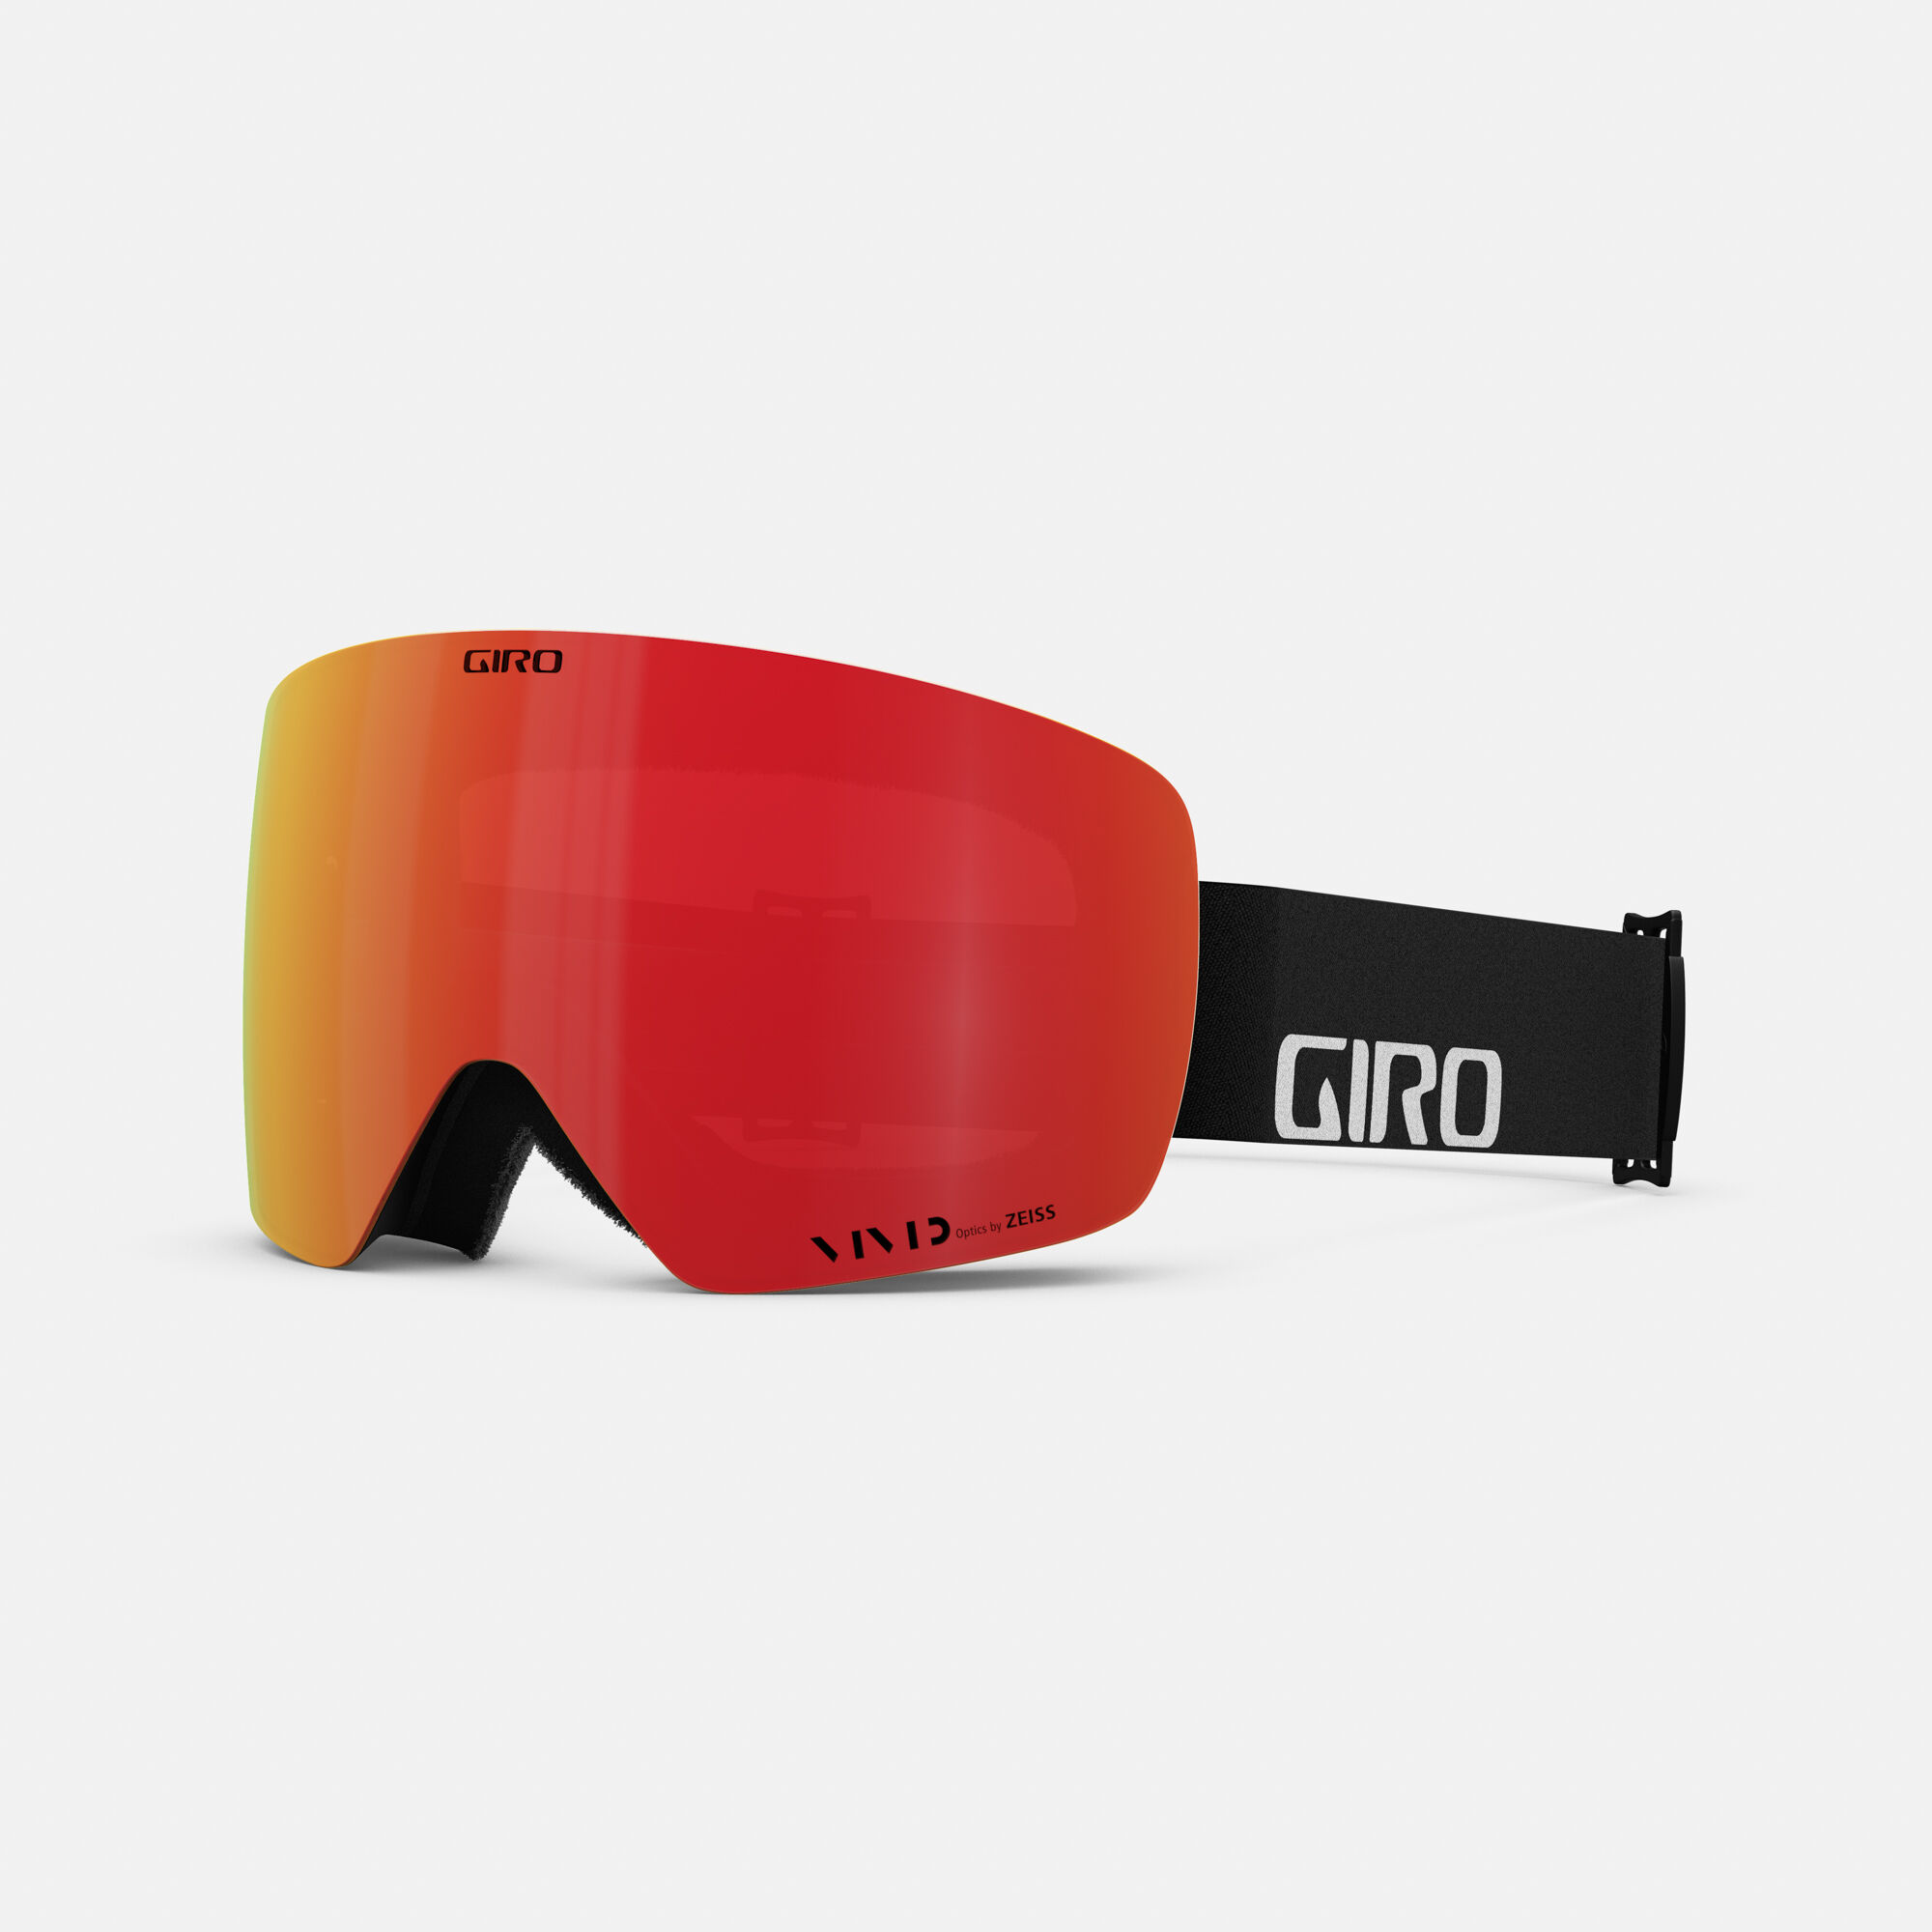 GIRO BALANCE GP BLACK ORANGE Snowboardbrille Skibrille Anti Fog UV Schutz 